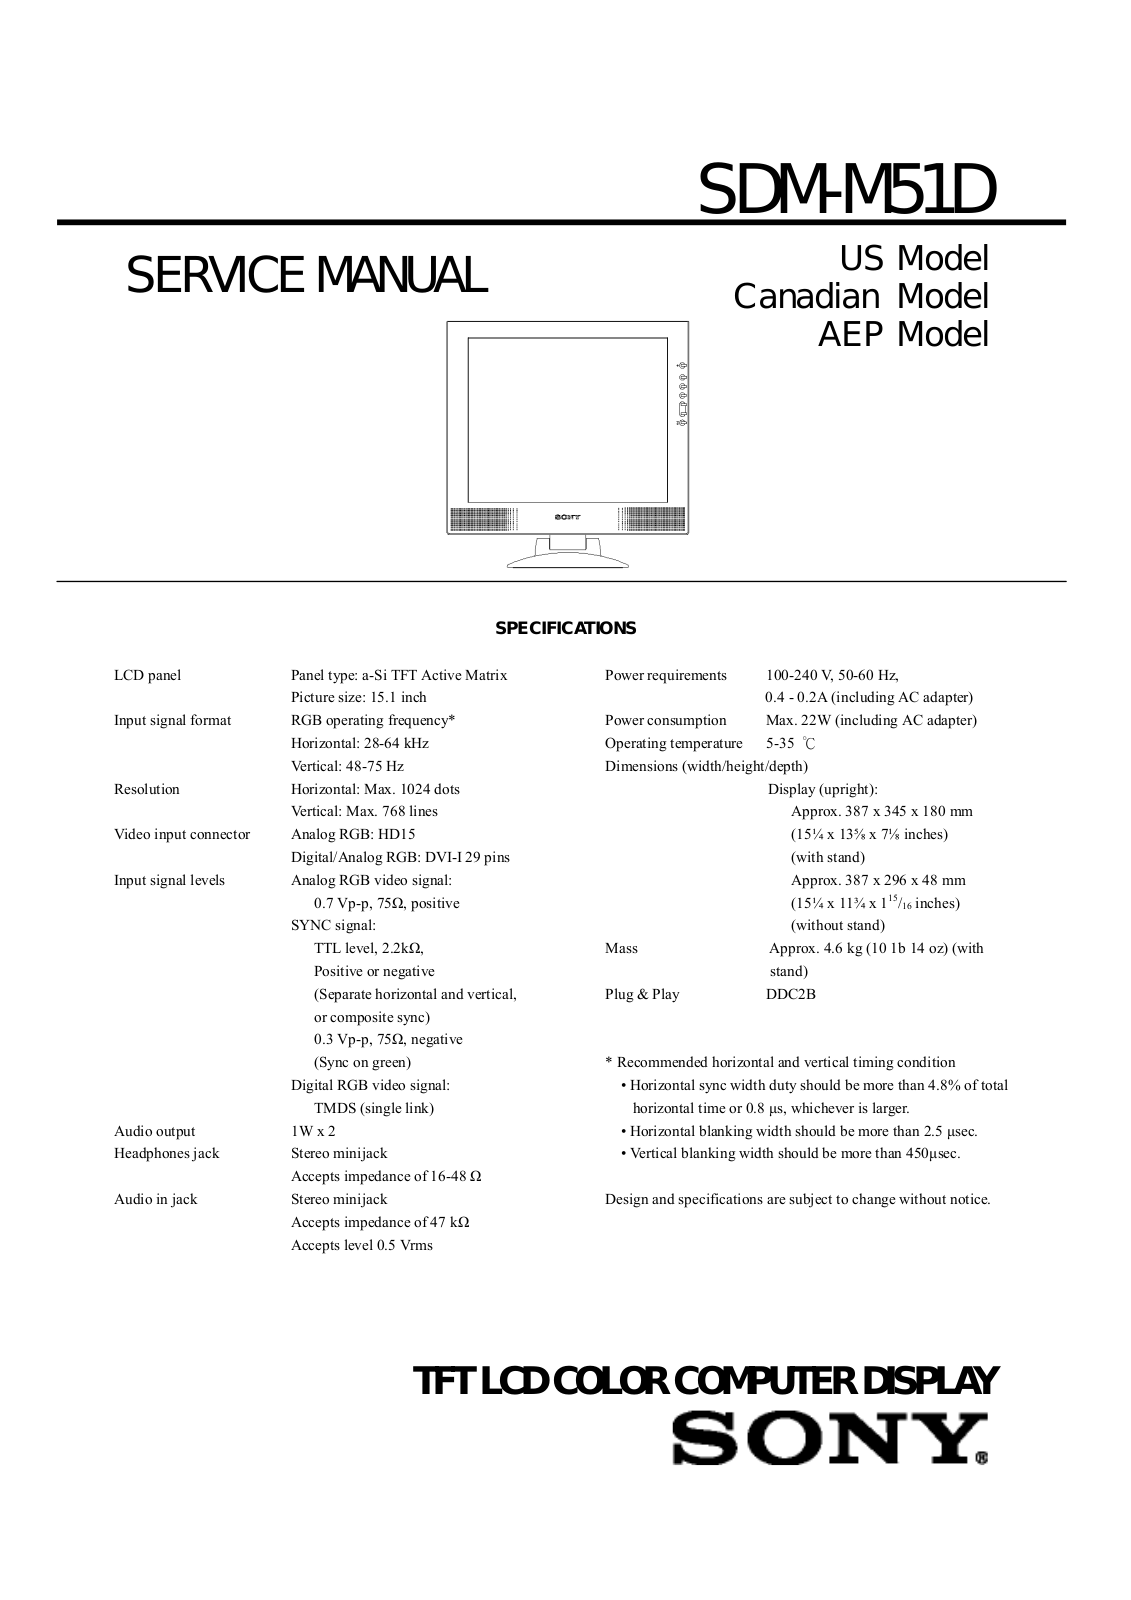 Sony SDM-M51D Service manual